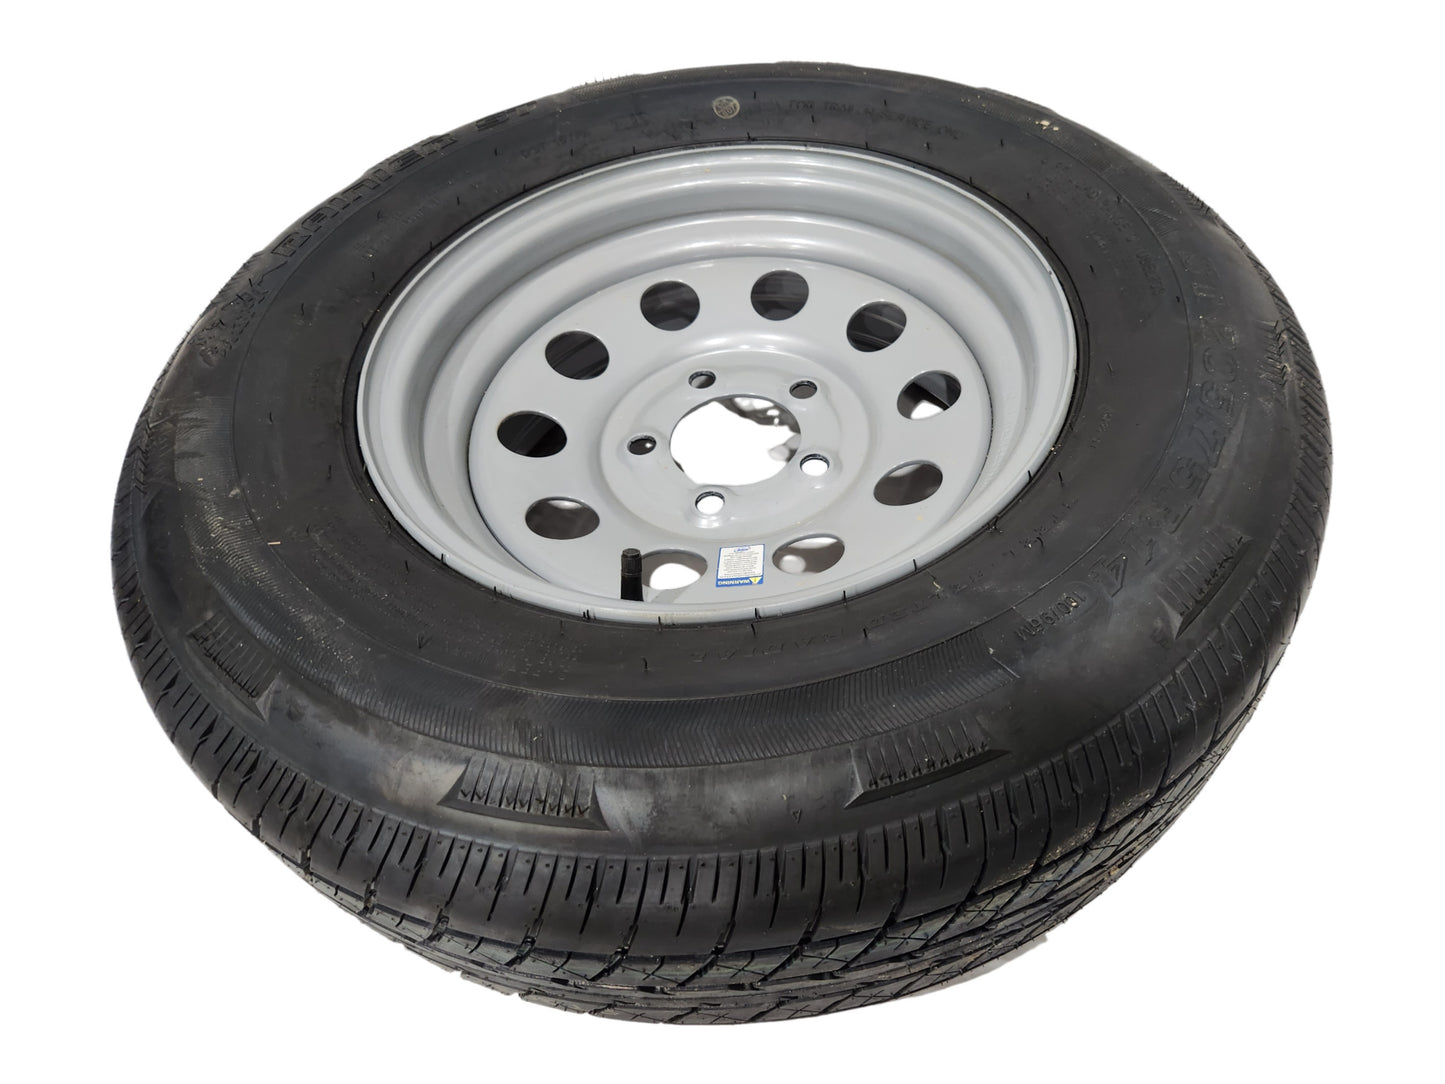 Rainier ST205/75R14C Silver Spoke Tire